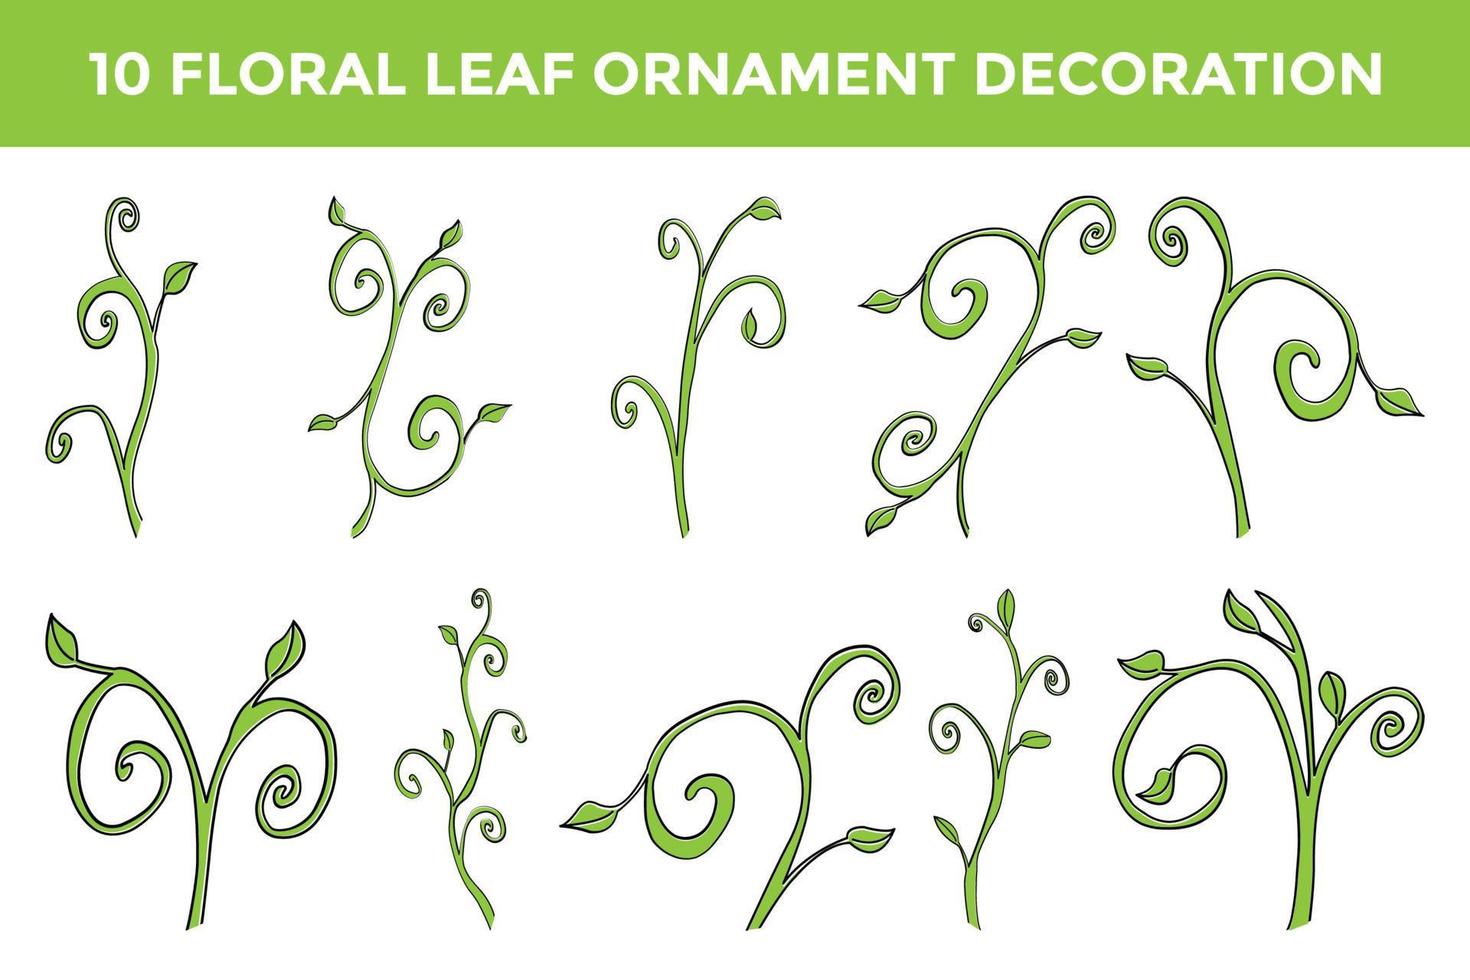 Floral leaf ornament decoration collection vector